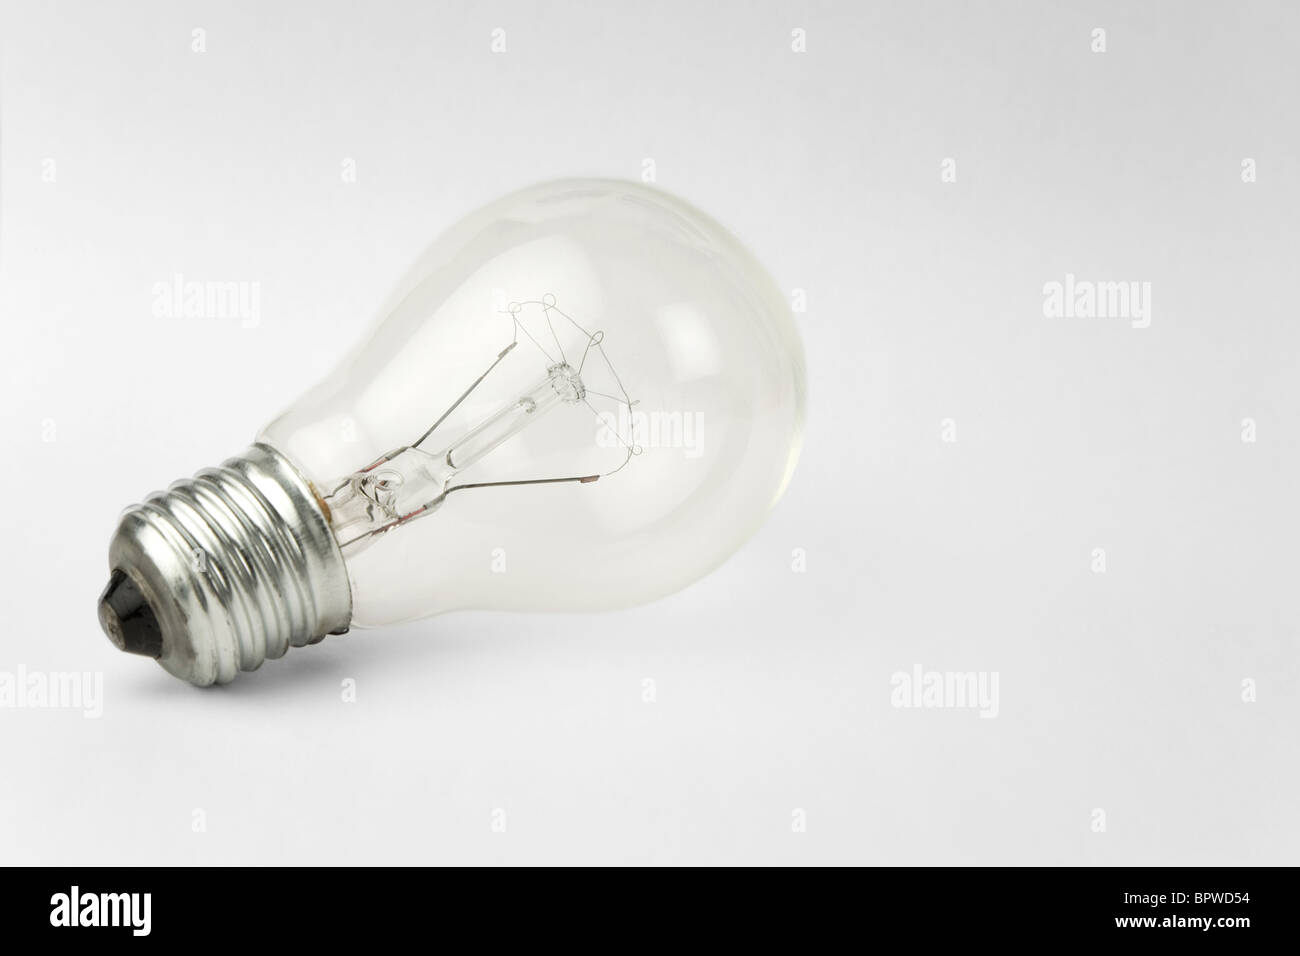 Light Bulb close up shot Stock Photo